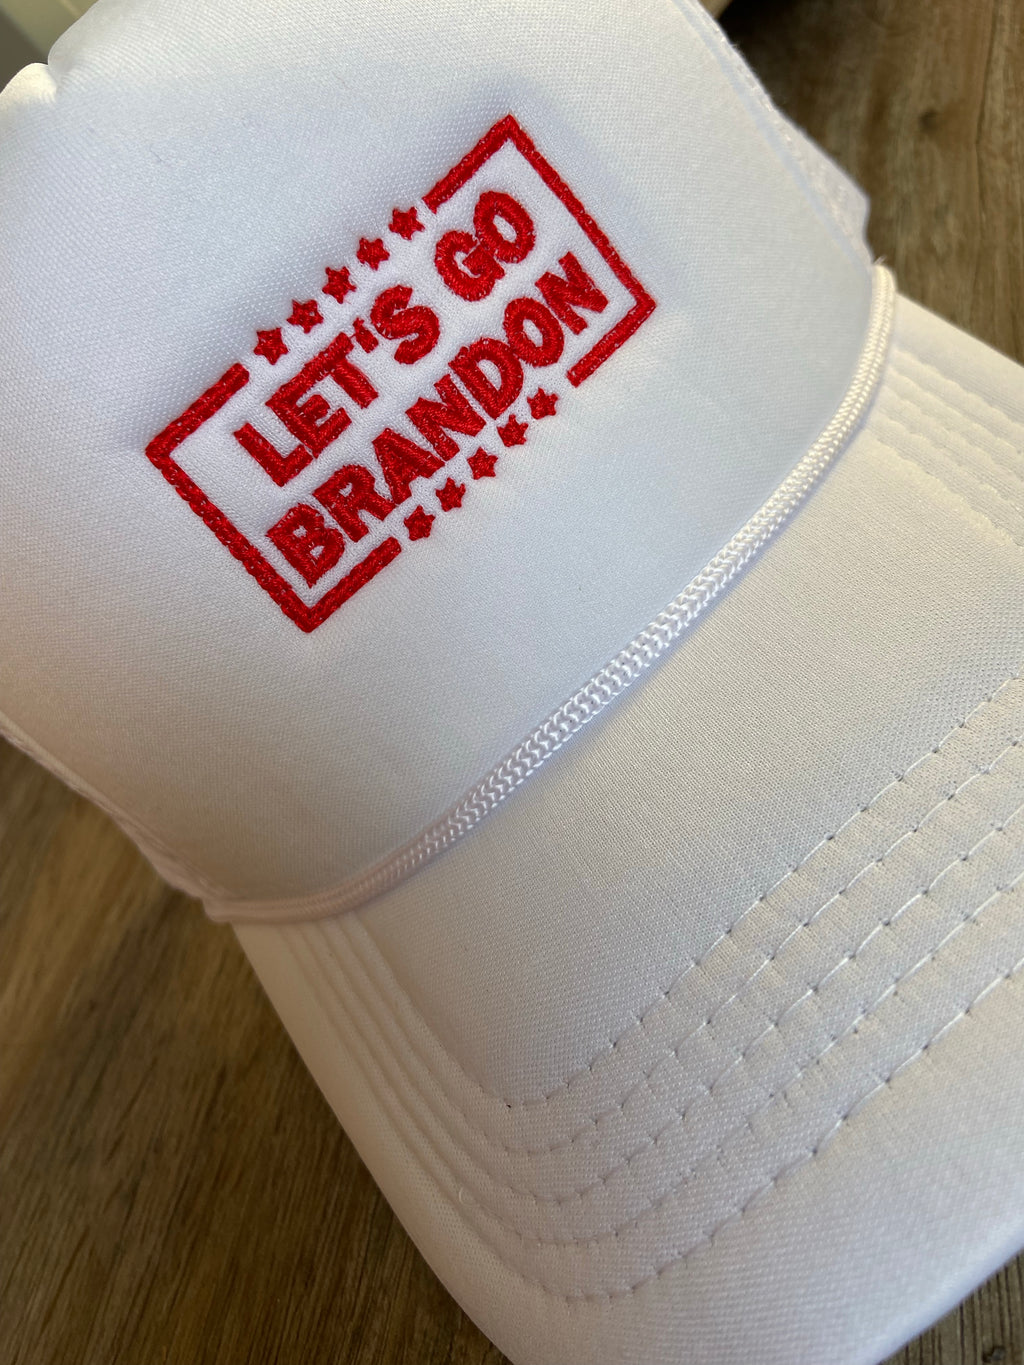 Let’s go Brandon white with red thread trucker hat